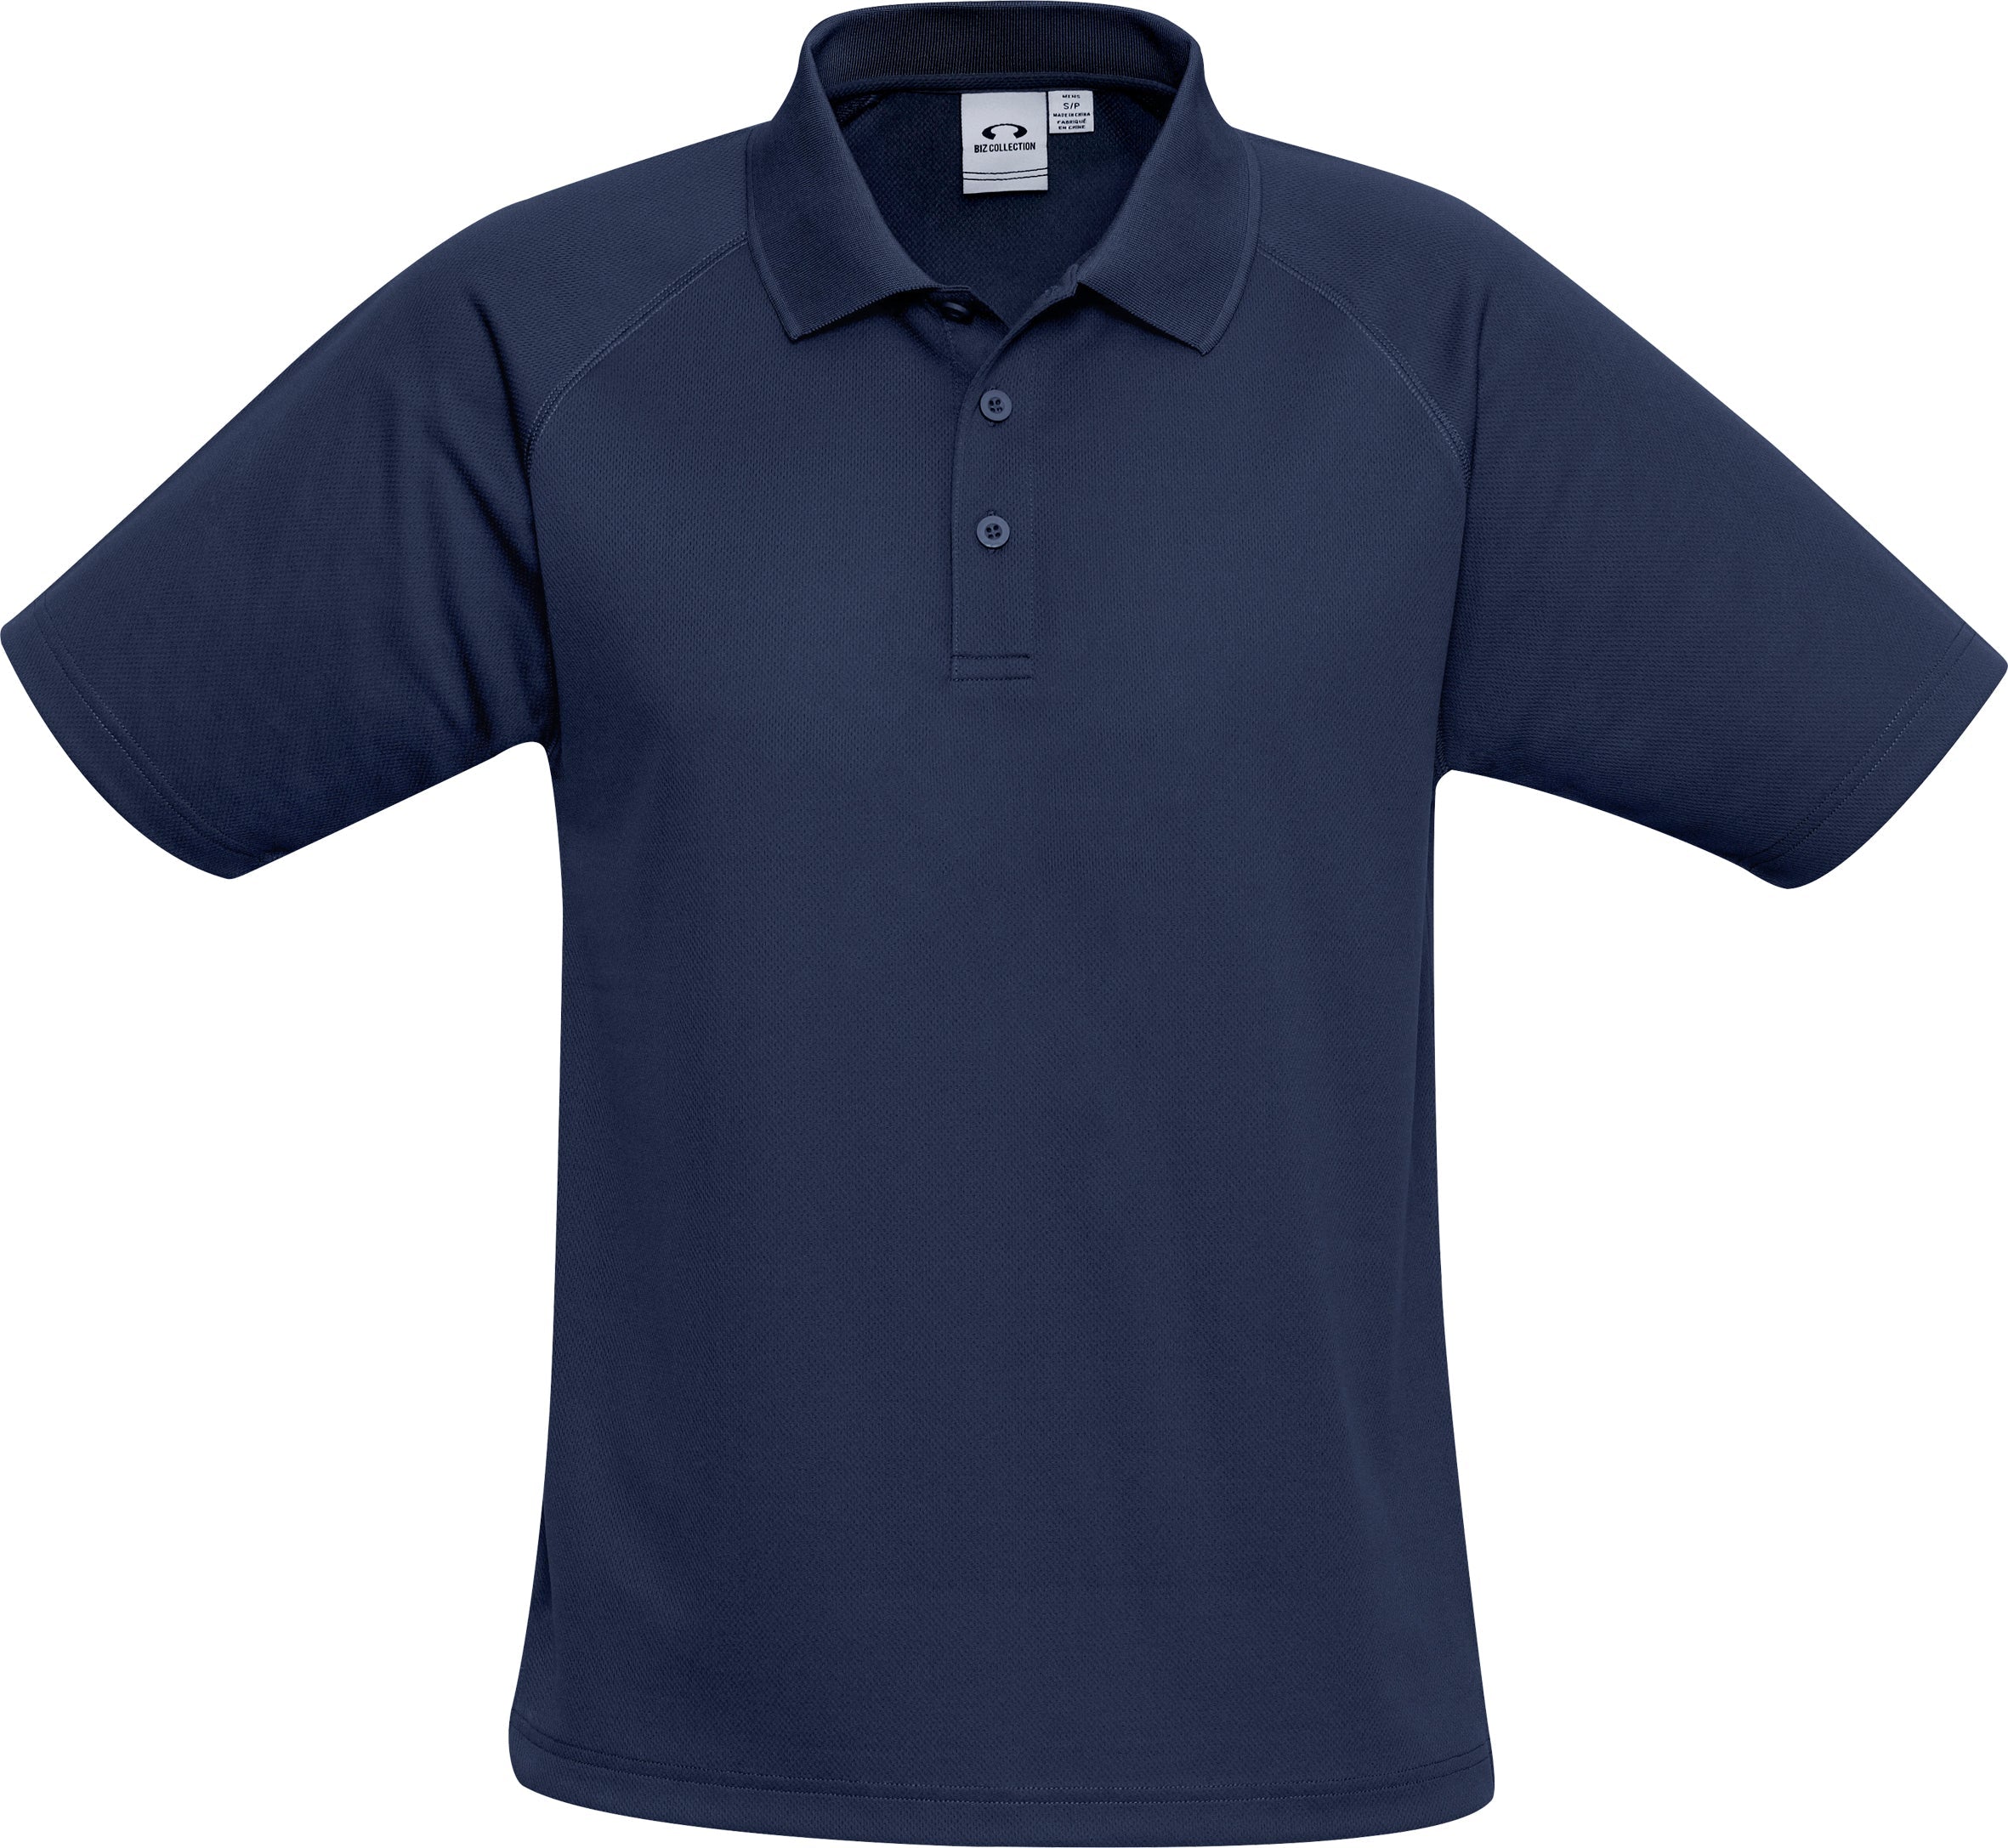 Mens Sprint Golf Shirt - White Only-L-Navy-N